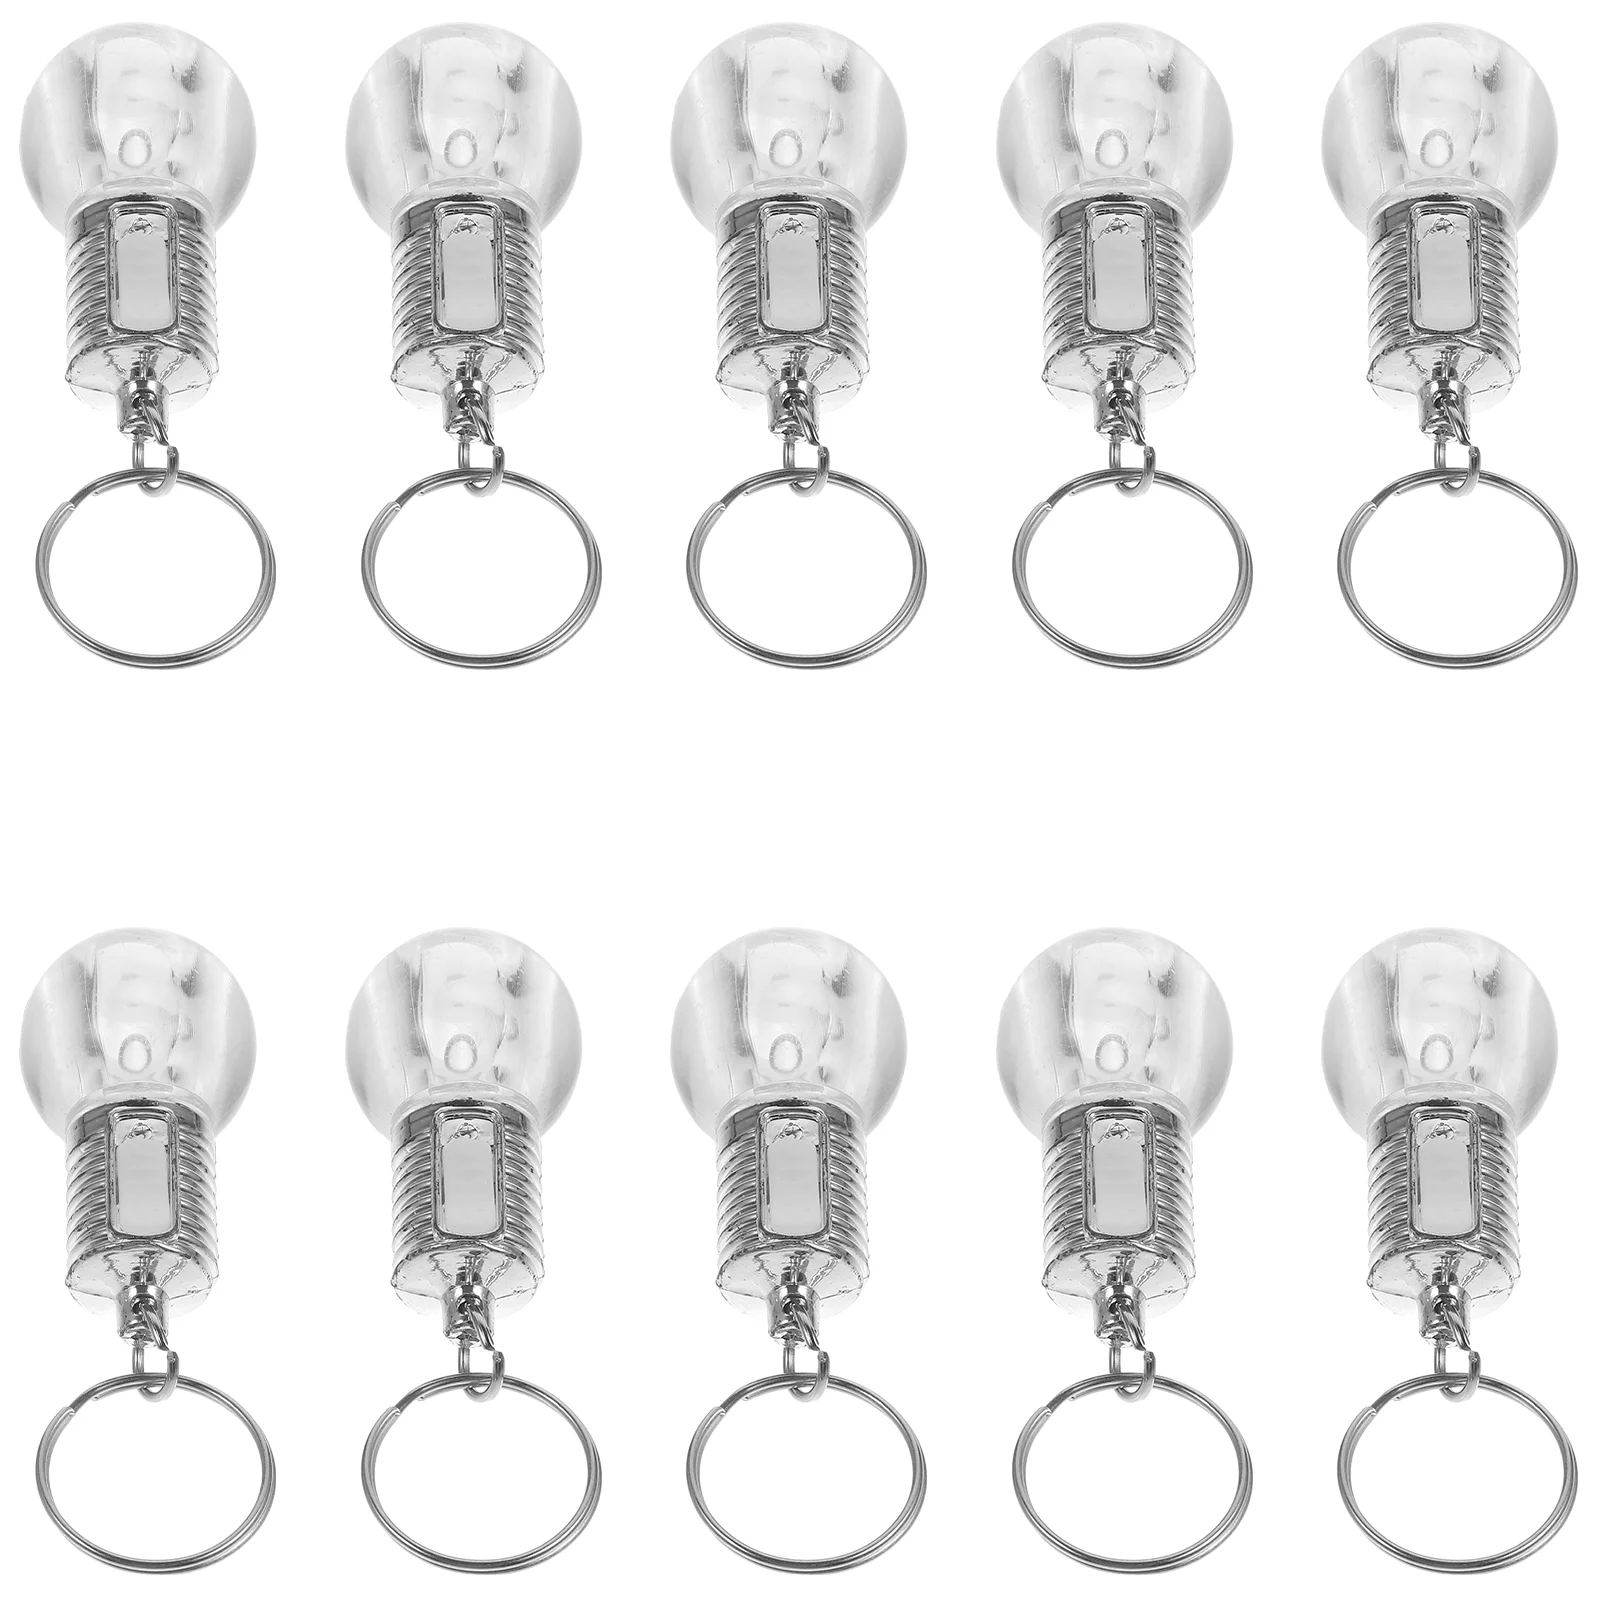 

10 Pcs LED Bulb Key Chain Clear Lamp Torch Keyring Mini Flashlight Shine Unique Design Keychain Colorful Changing